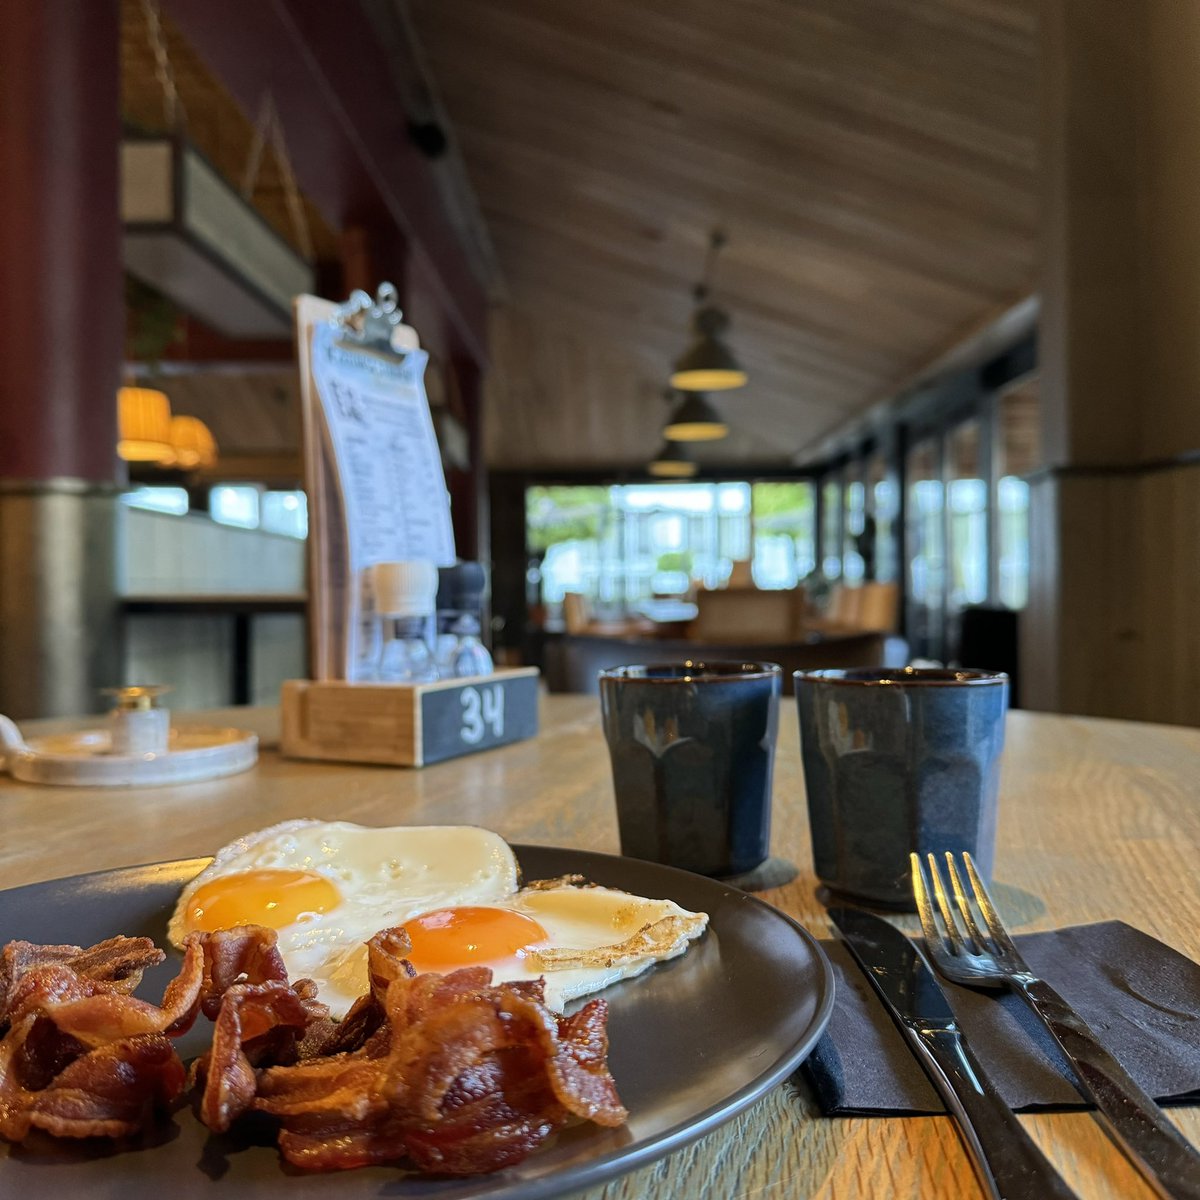 #hotelontbijtje...

#myview #hotel #hotelRenesse #DeZeeuwseStromen #Renesse 
.
#food #foodporn #foodphotography #breakfast #breakfasttime #coffee #eggs #noscrambledeggs #sunnydideup #bacon